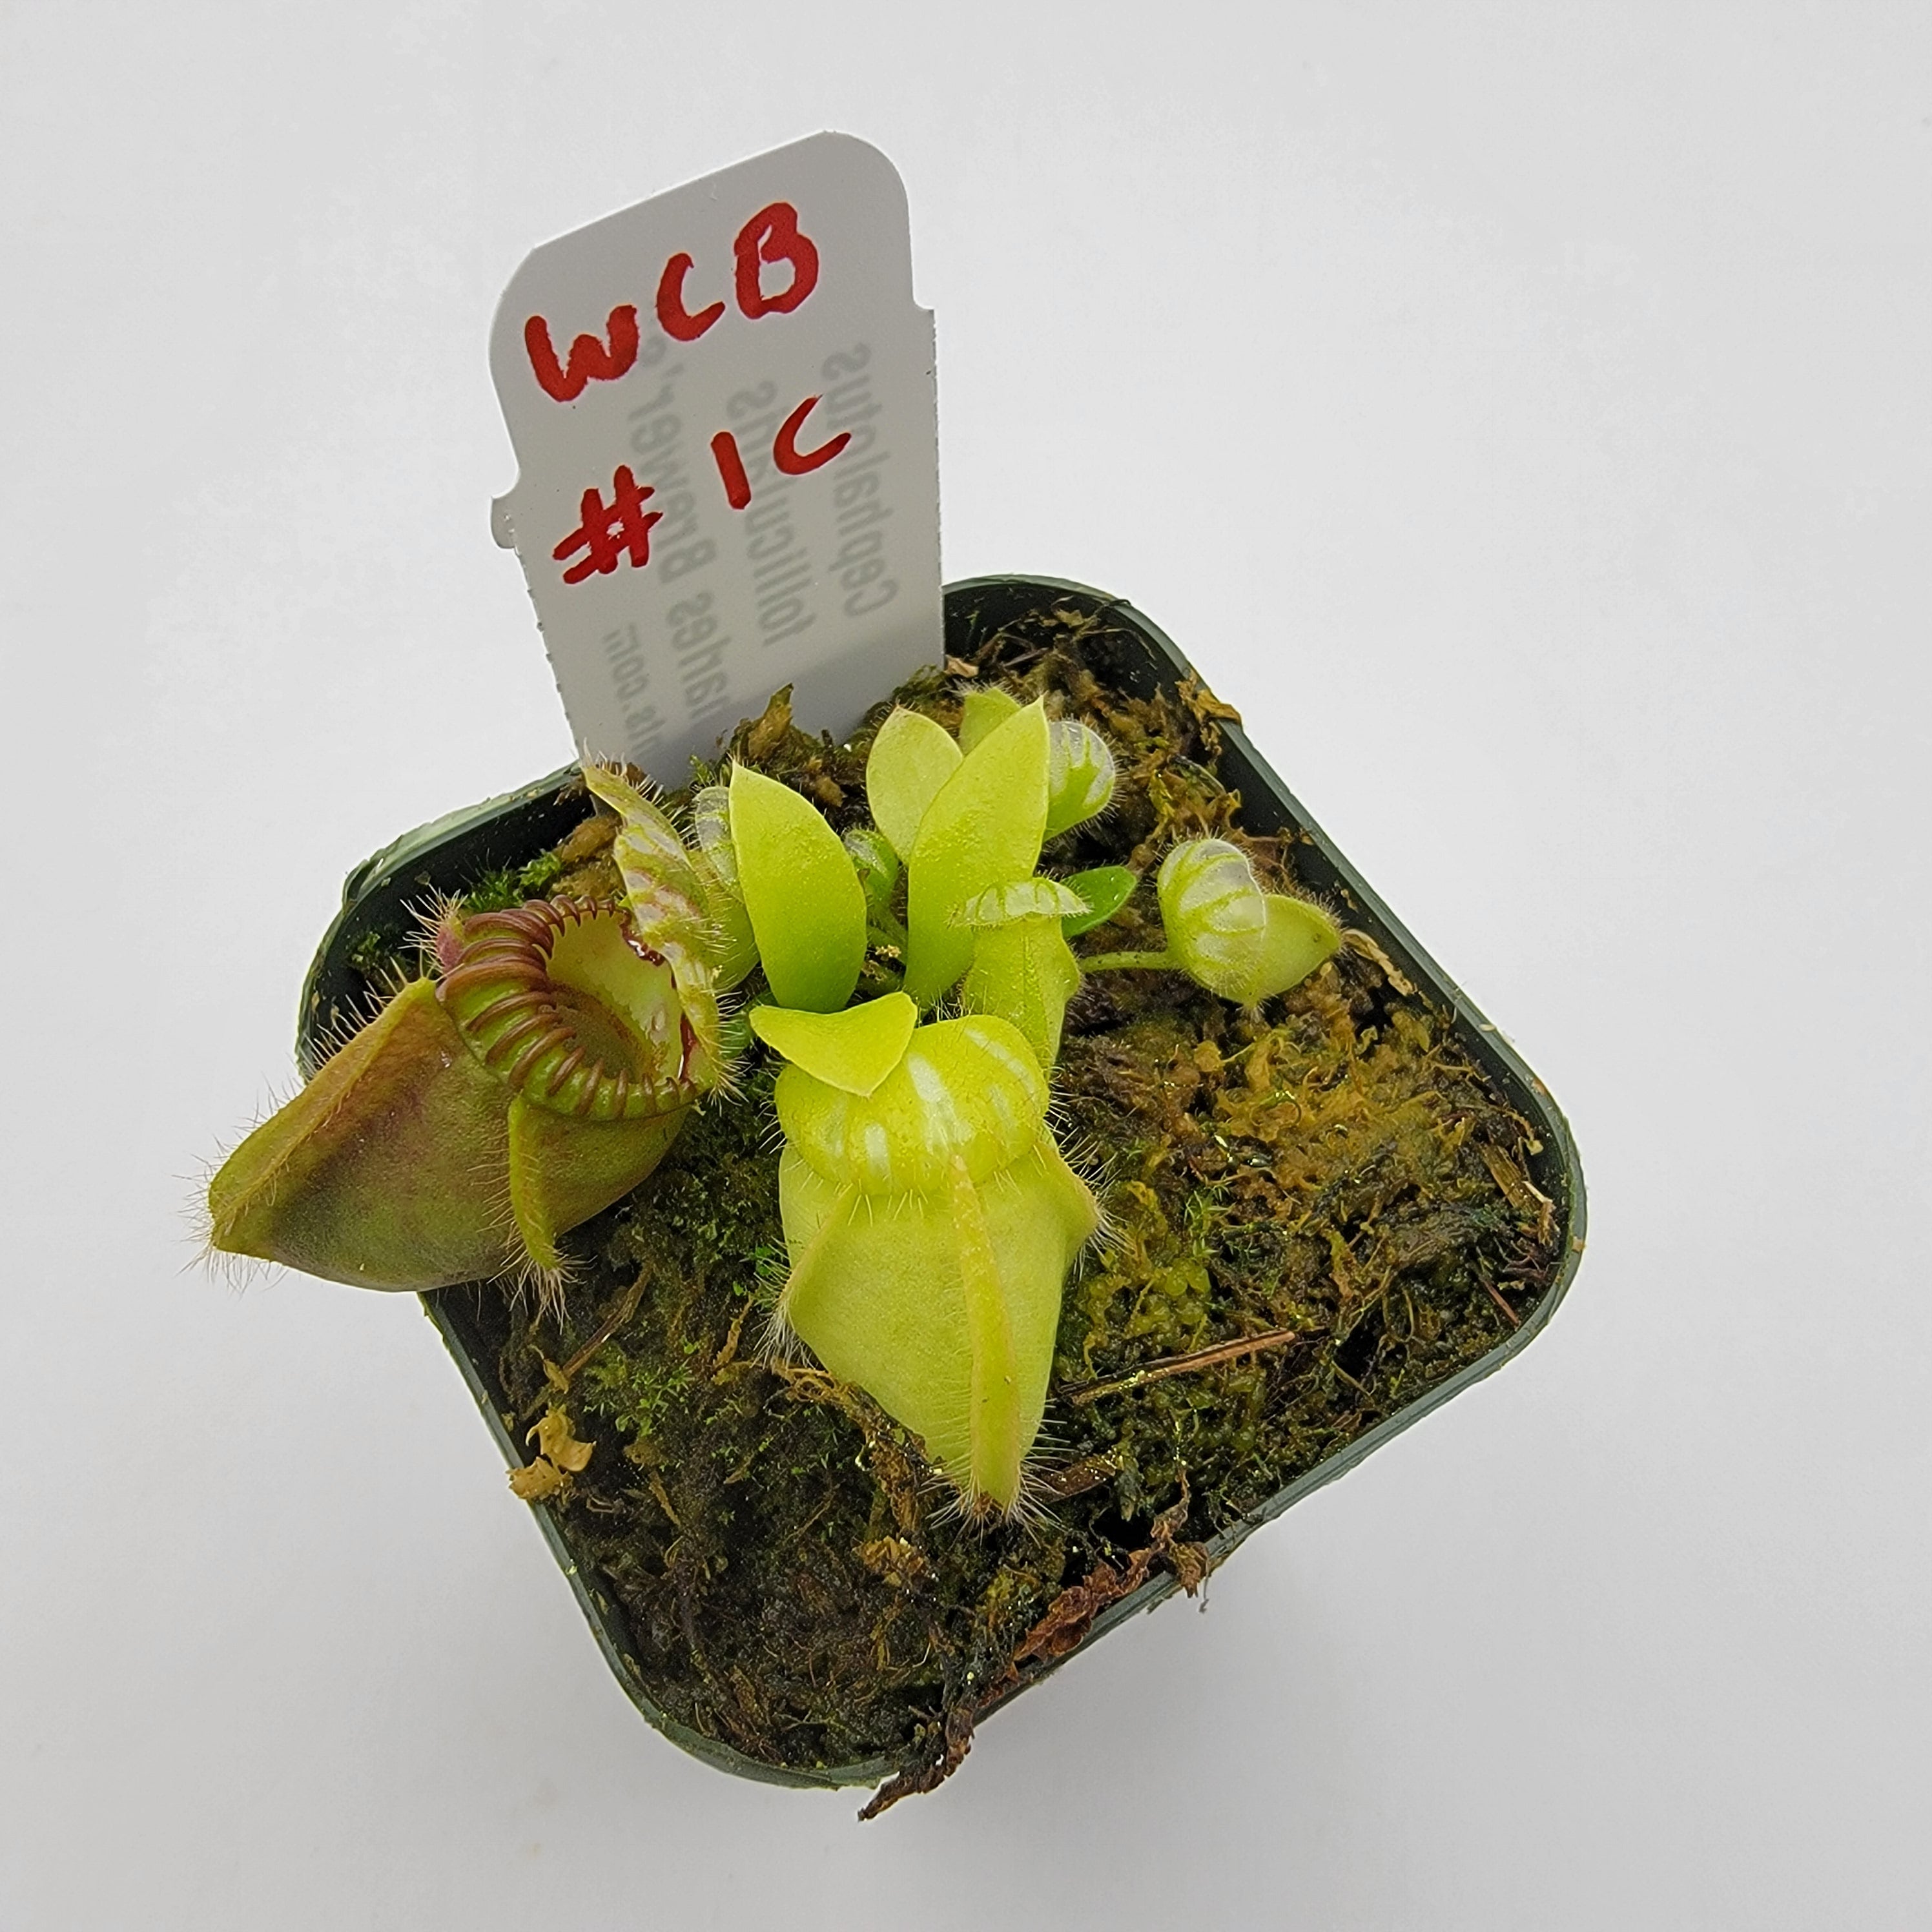 Cephalotus follicularis "Charles Brewer's" clone WCB (1C-16C) - Rainbow Carnivorous Plants LLC